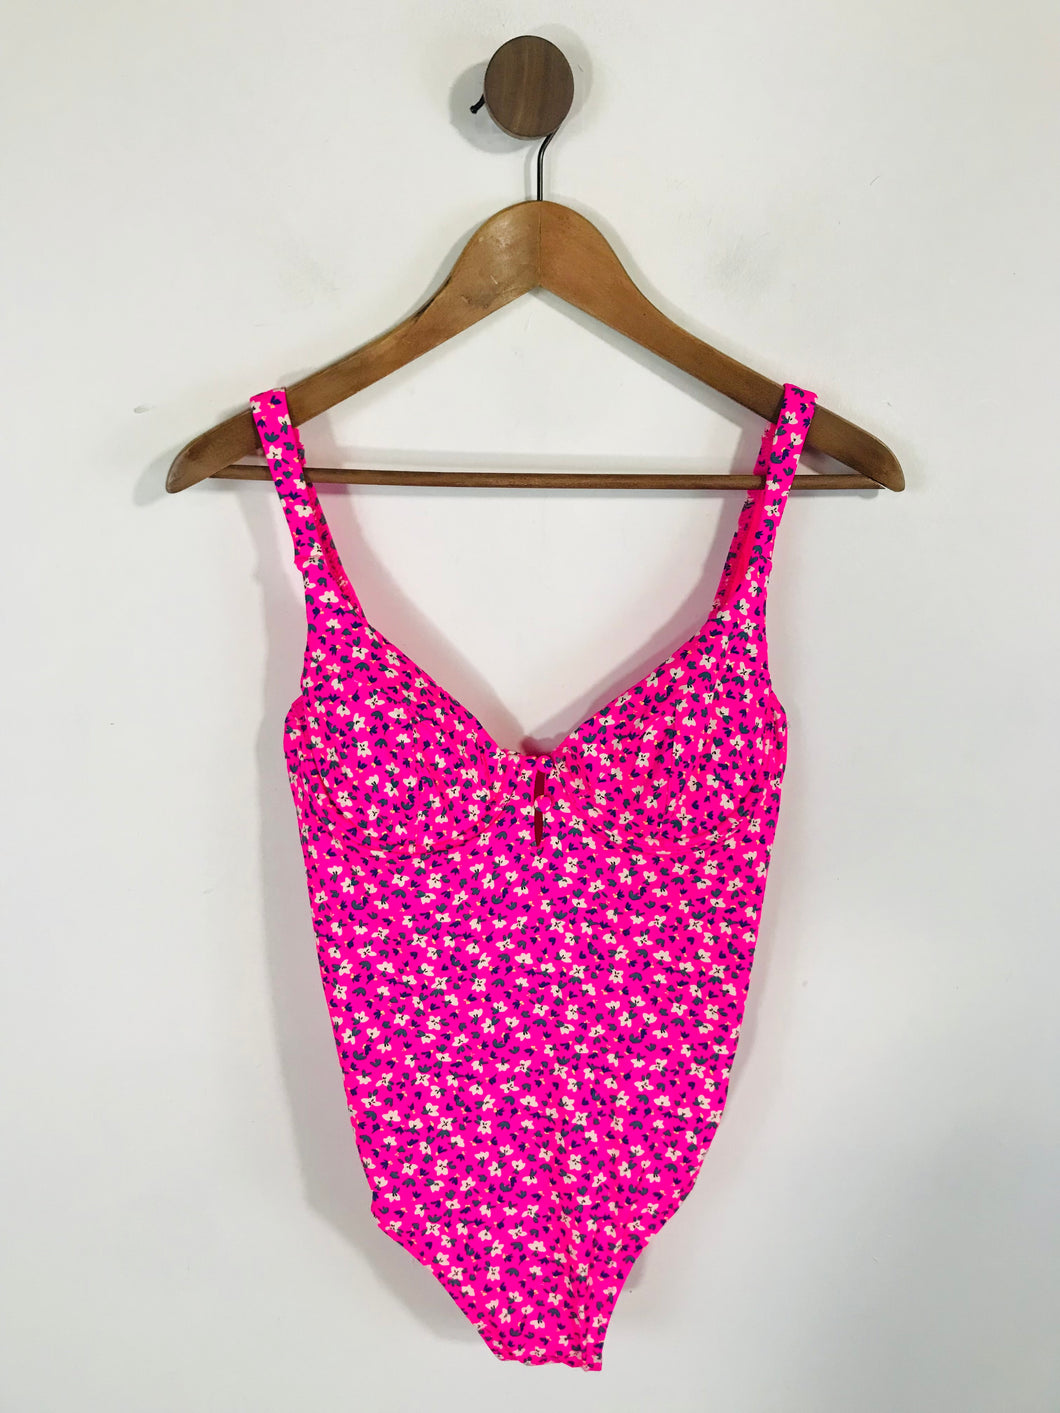 Zara Women's Floral One Piece Swimsuit | M UK10-12 | Pink